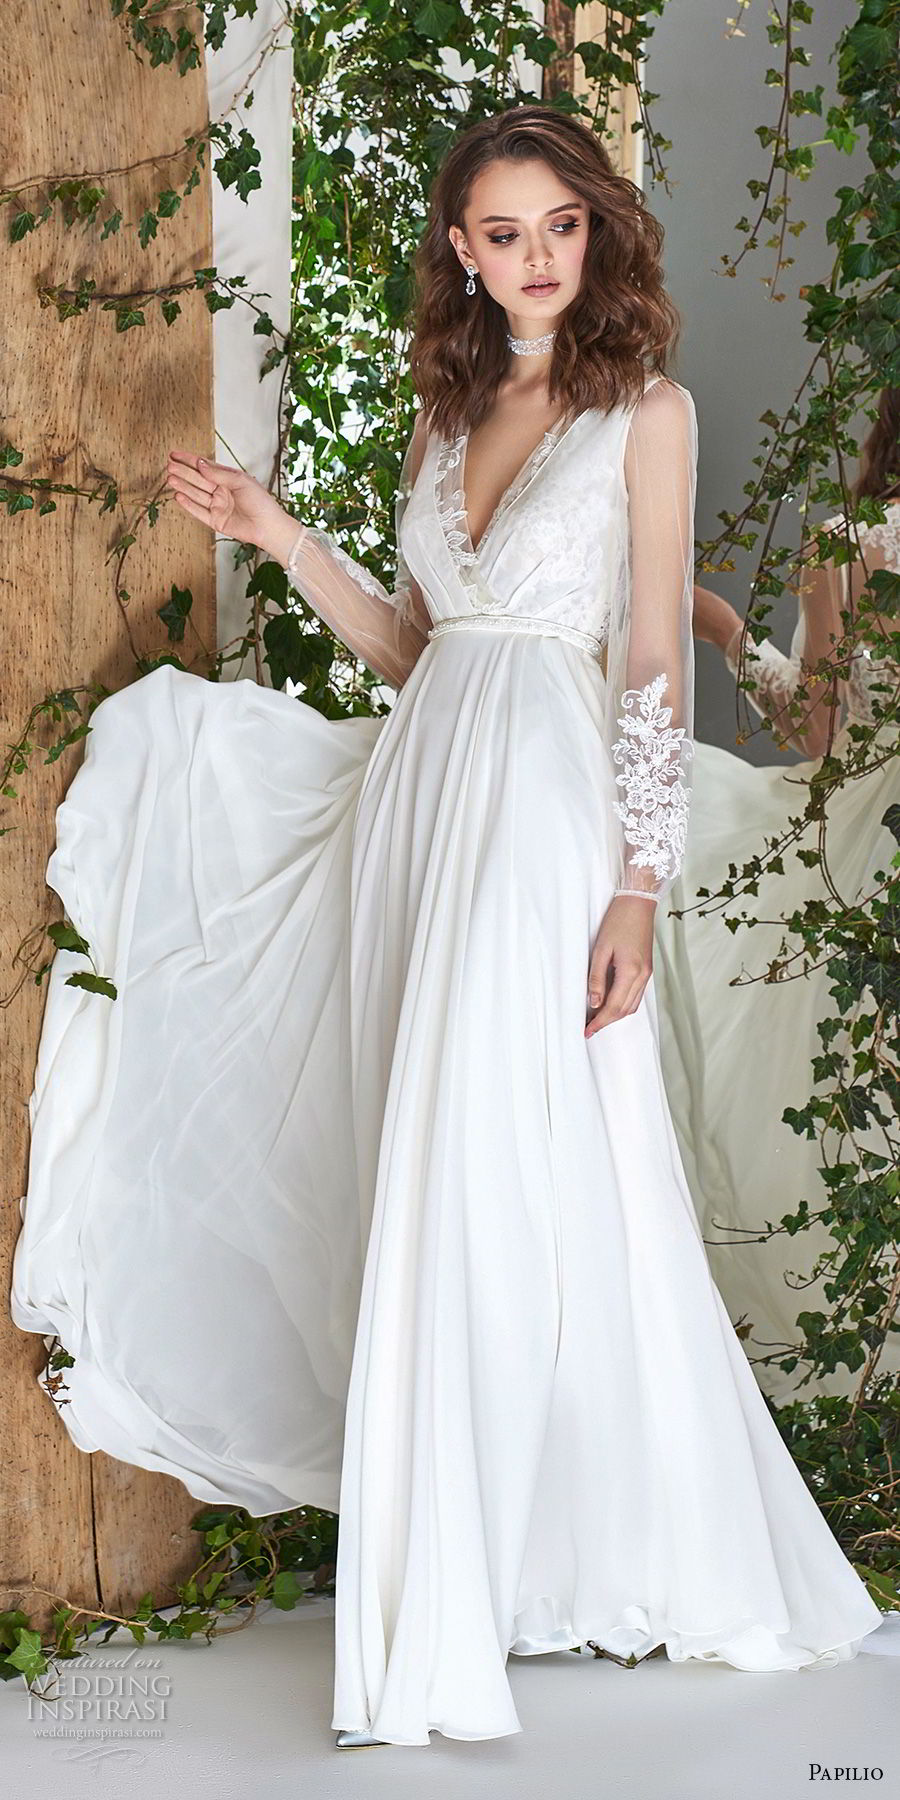 Wrap Around Dress For Wedding Hot Sale, UP TO 59% OFF |  www.lali-iniciativa.com